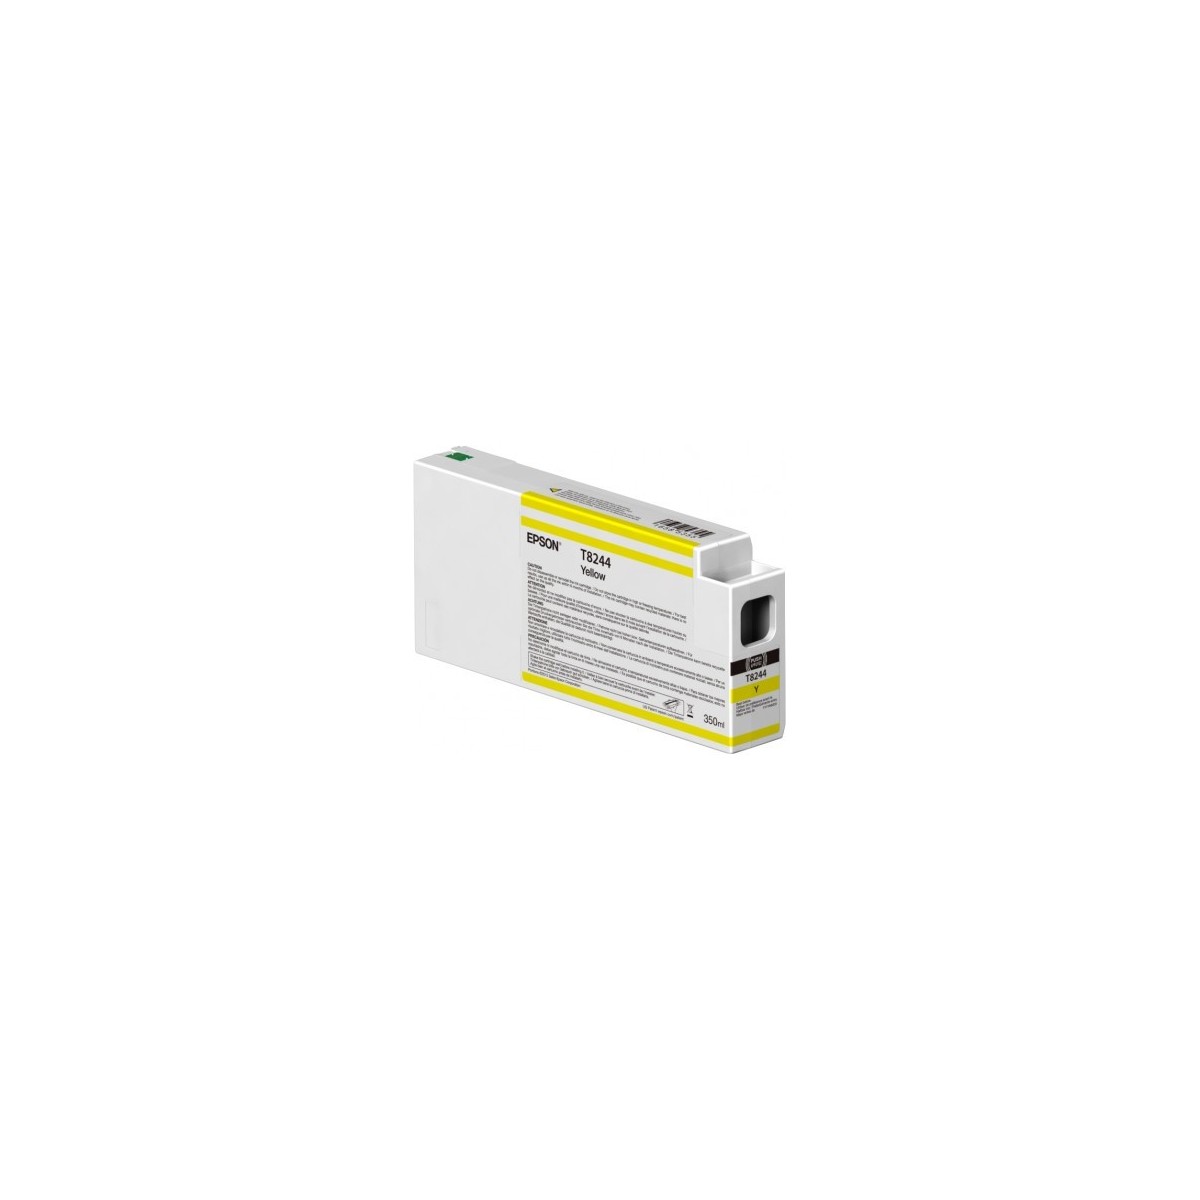 Epson Singlepack Light Cyan T824500 UltraChrome HDX/HD 350ml - Pigment-based ink - 350 ml - 1 pc(s)